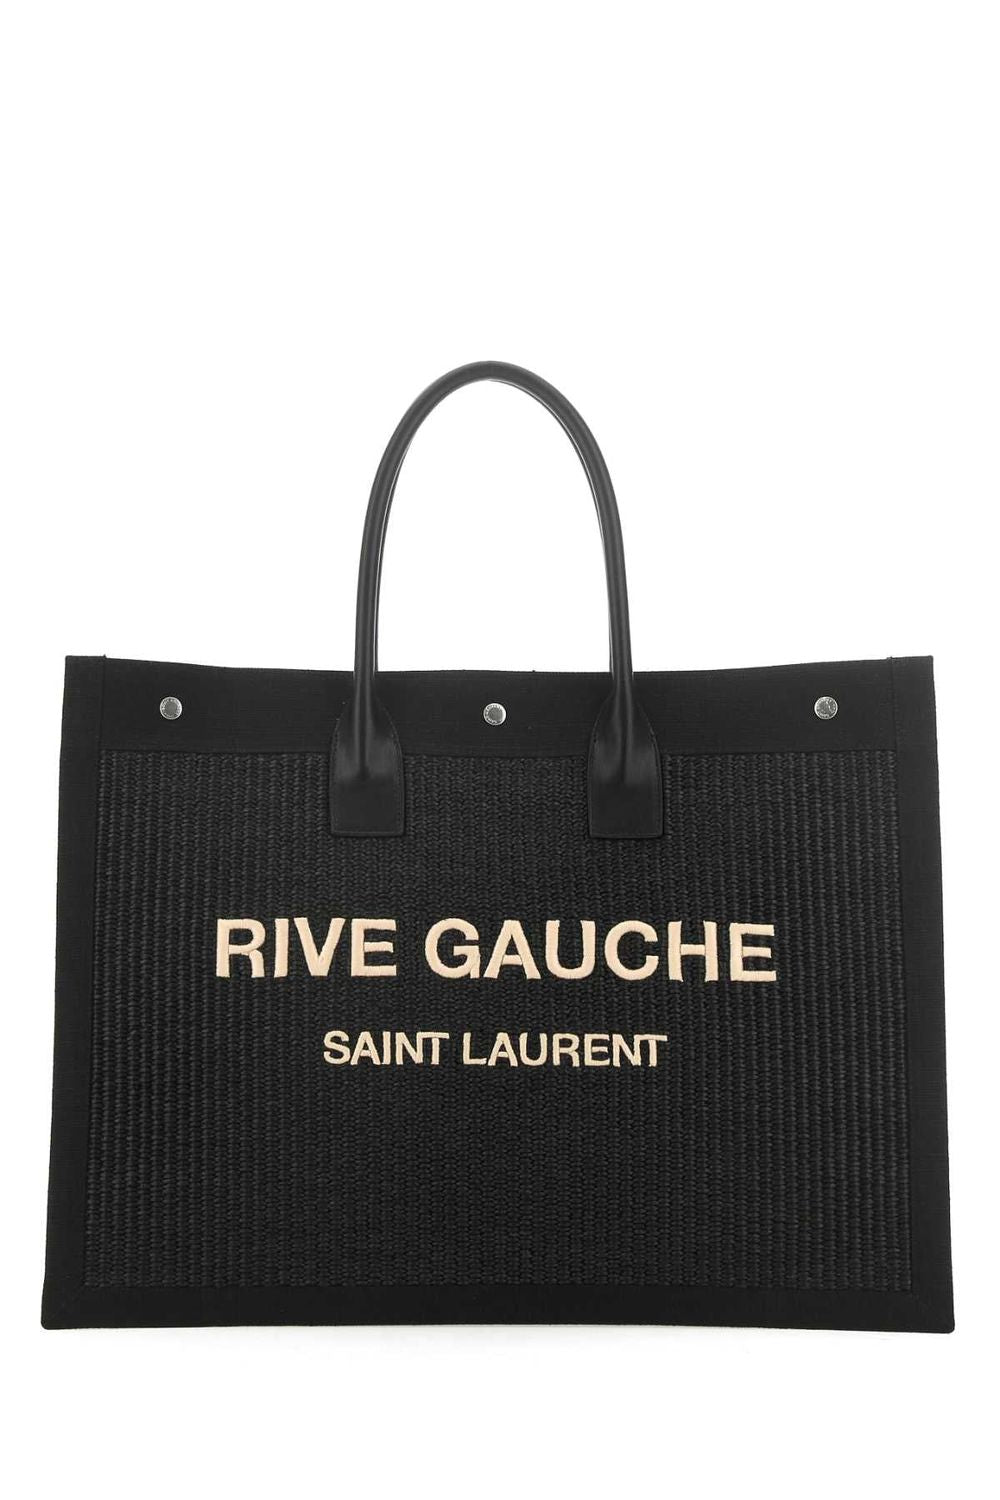 SAINT LAURENT Stylish Black Canvas Tote Handbag for Men - SS23 Collection